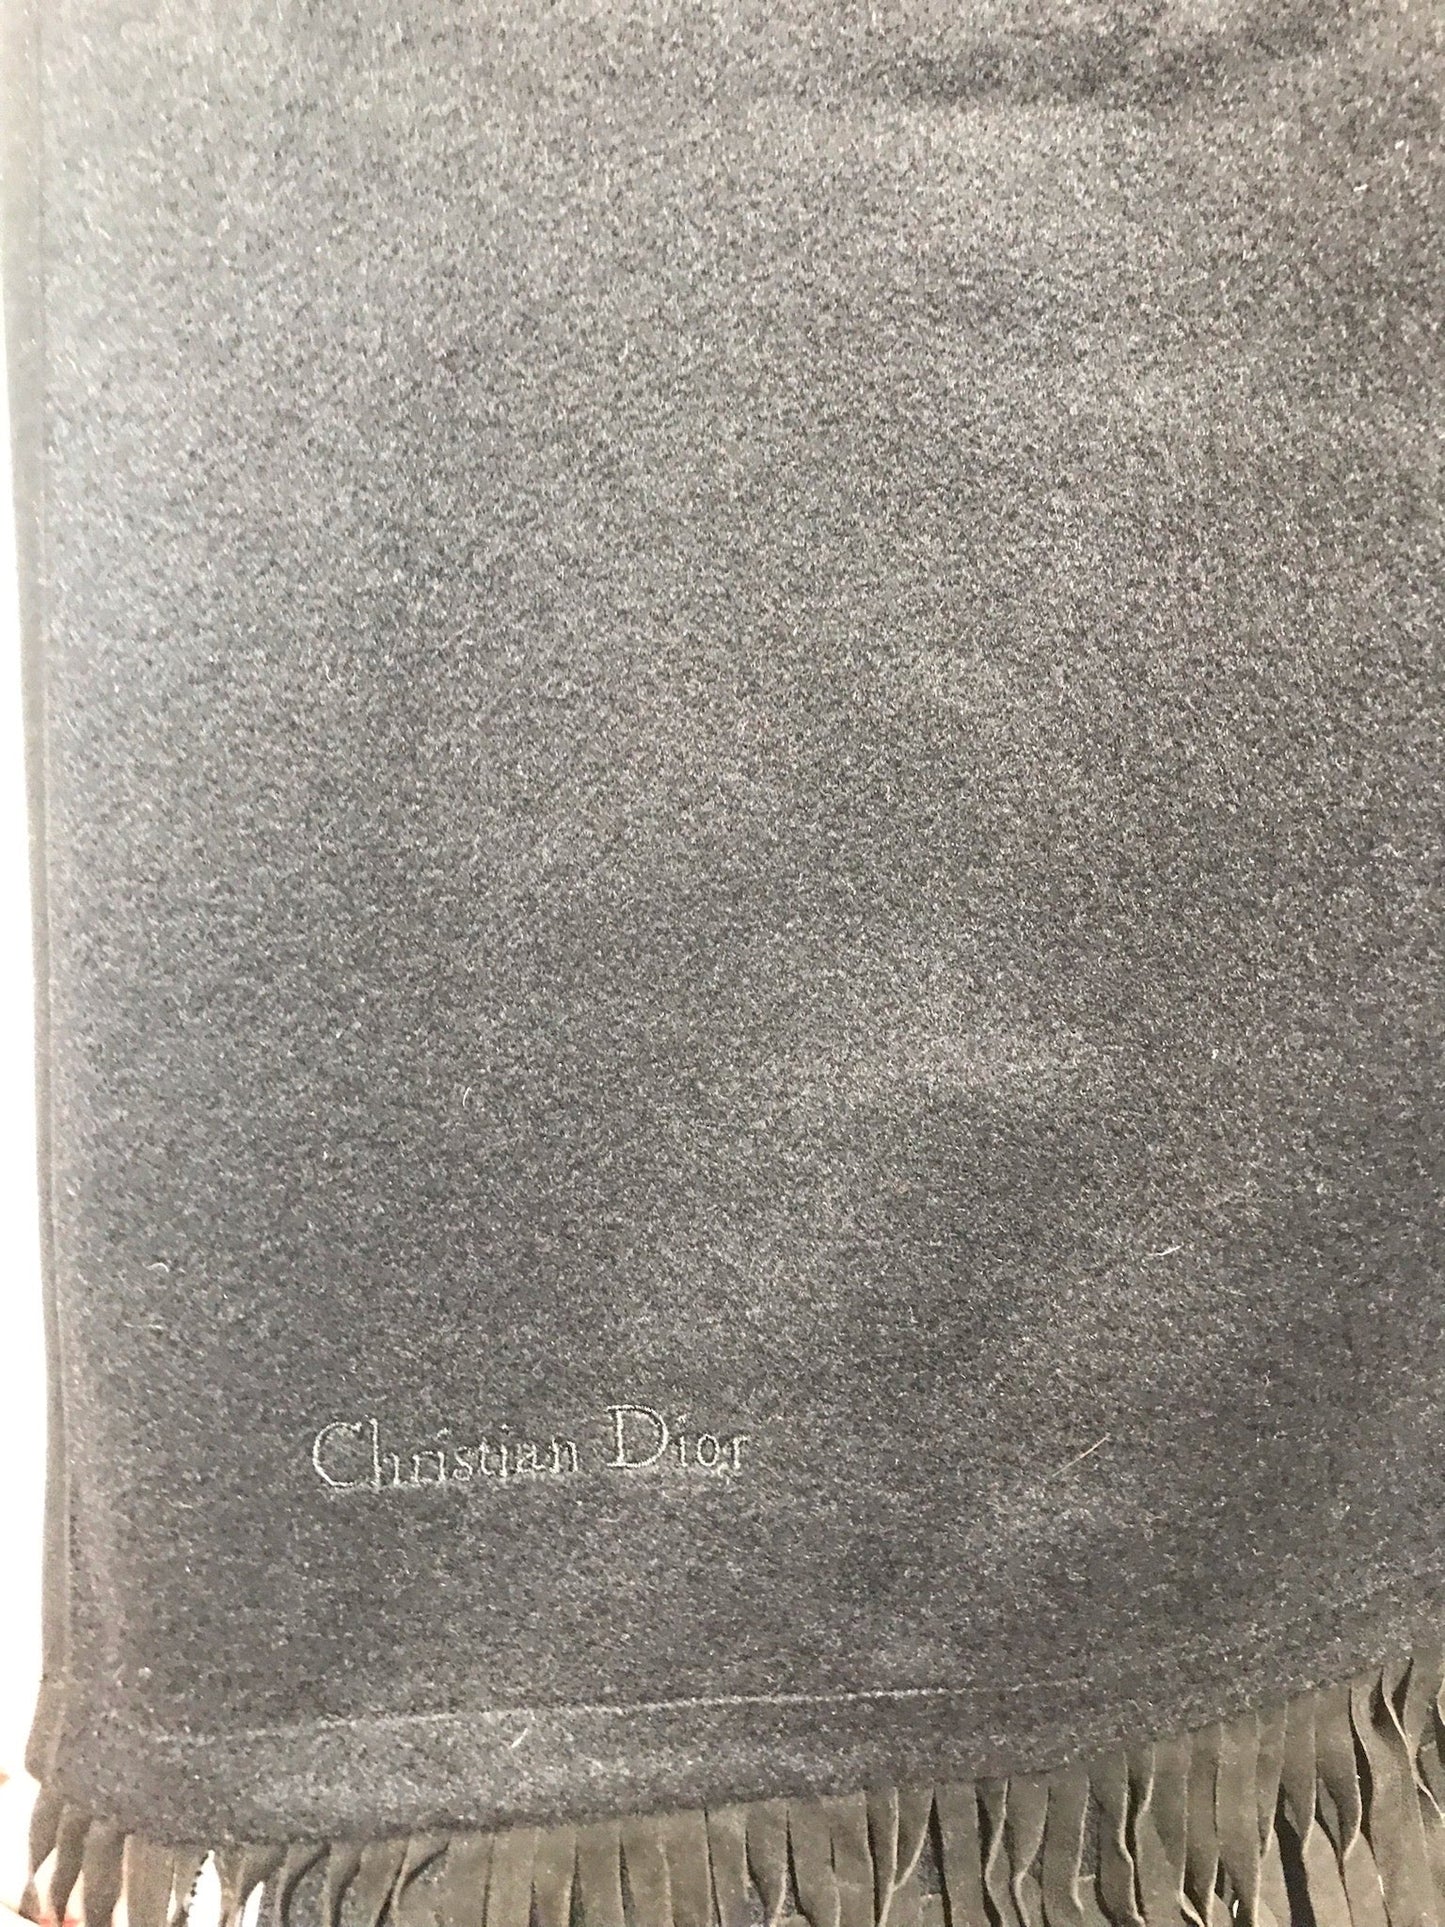 Echarpe Christian Dior noir